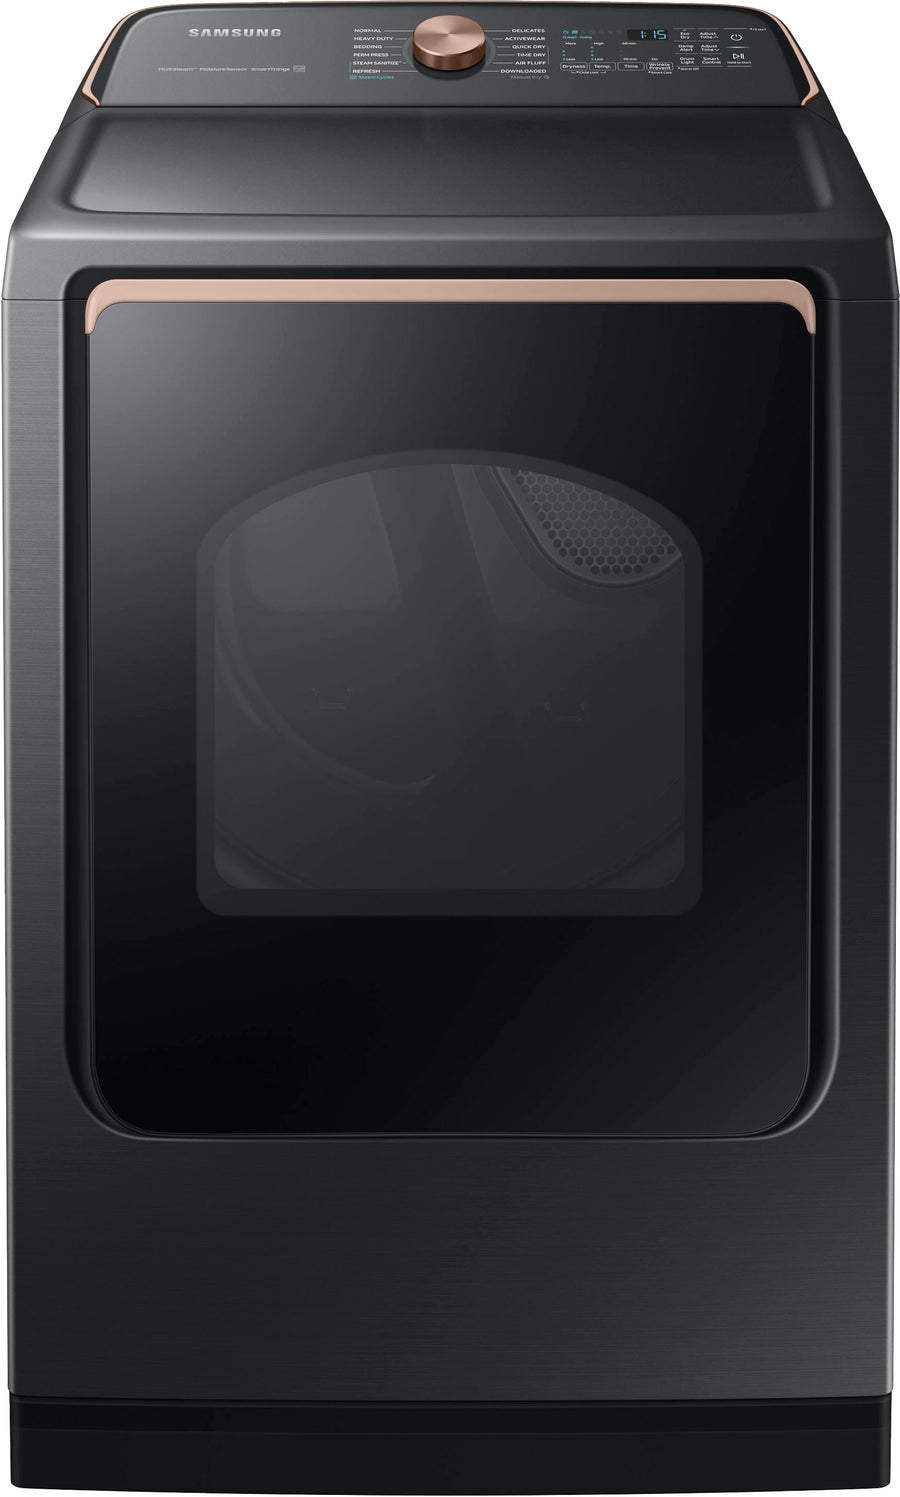 Samsung - 7.4 cu. ft. Smart Electric Dryer with Steam Sanitize+ - Brushed black_0